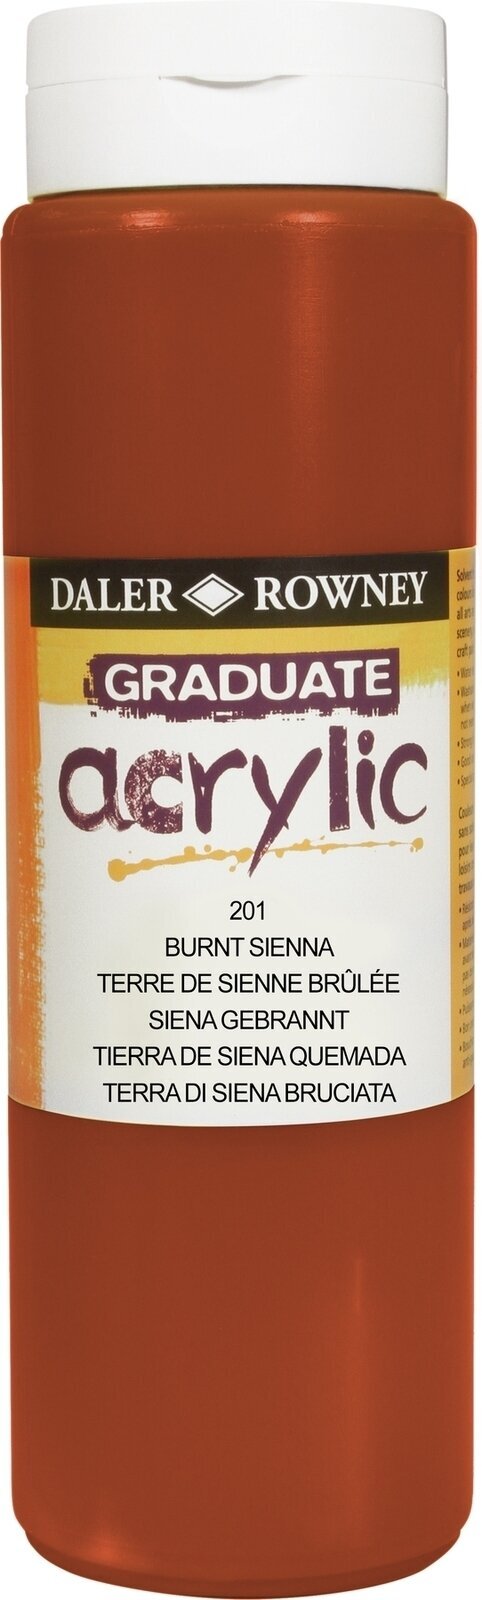 Akrylmaling Daler Rowney Graduate Akrylmaling Burnt Sienna 500 ml 1 stk.